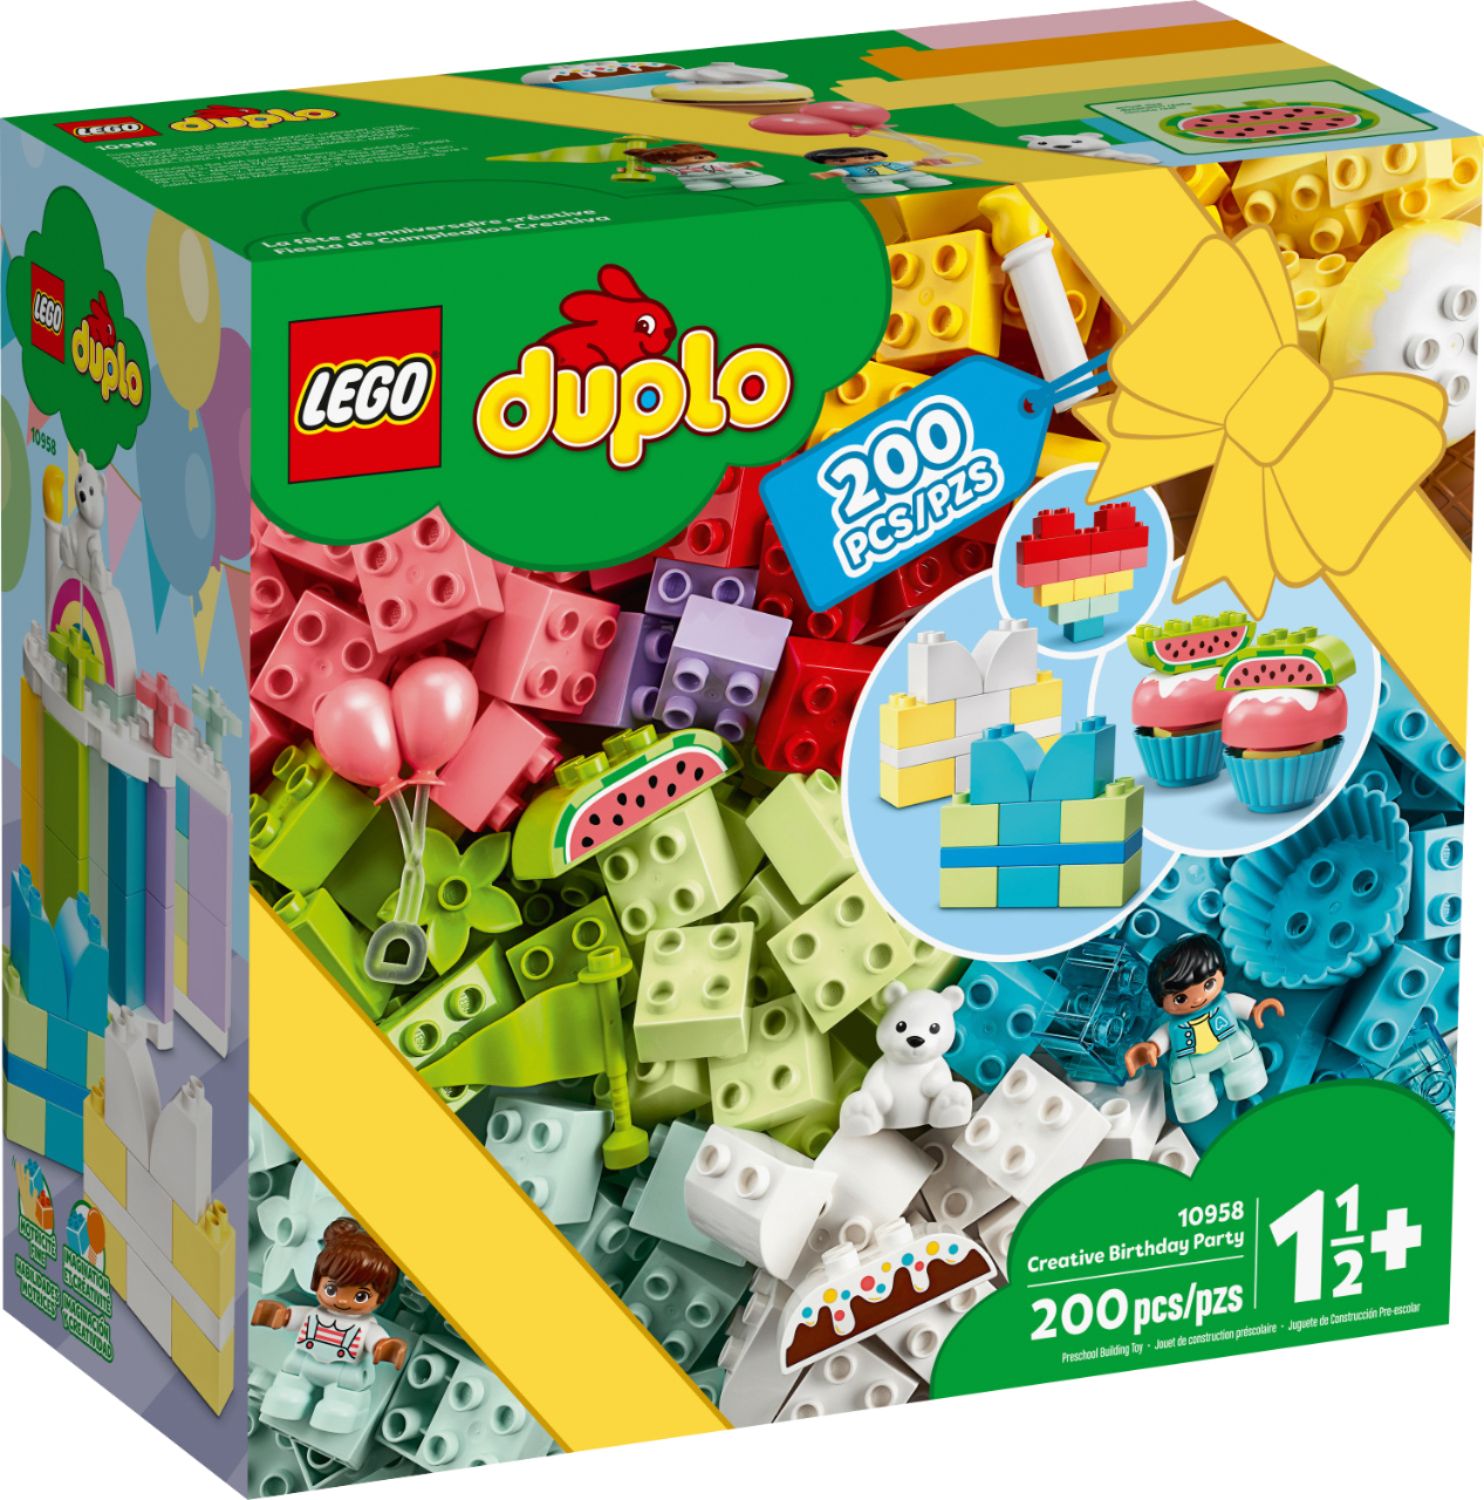 Left View: LEGO - DUPLO Classic Creative Birthday Party 10958